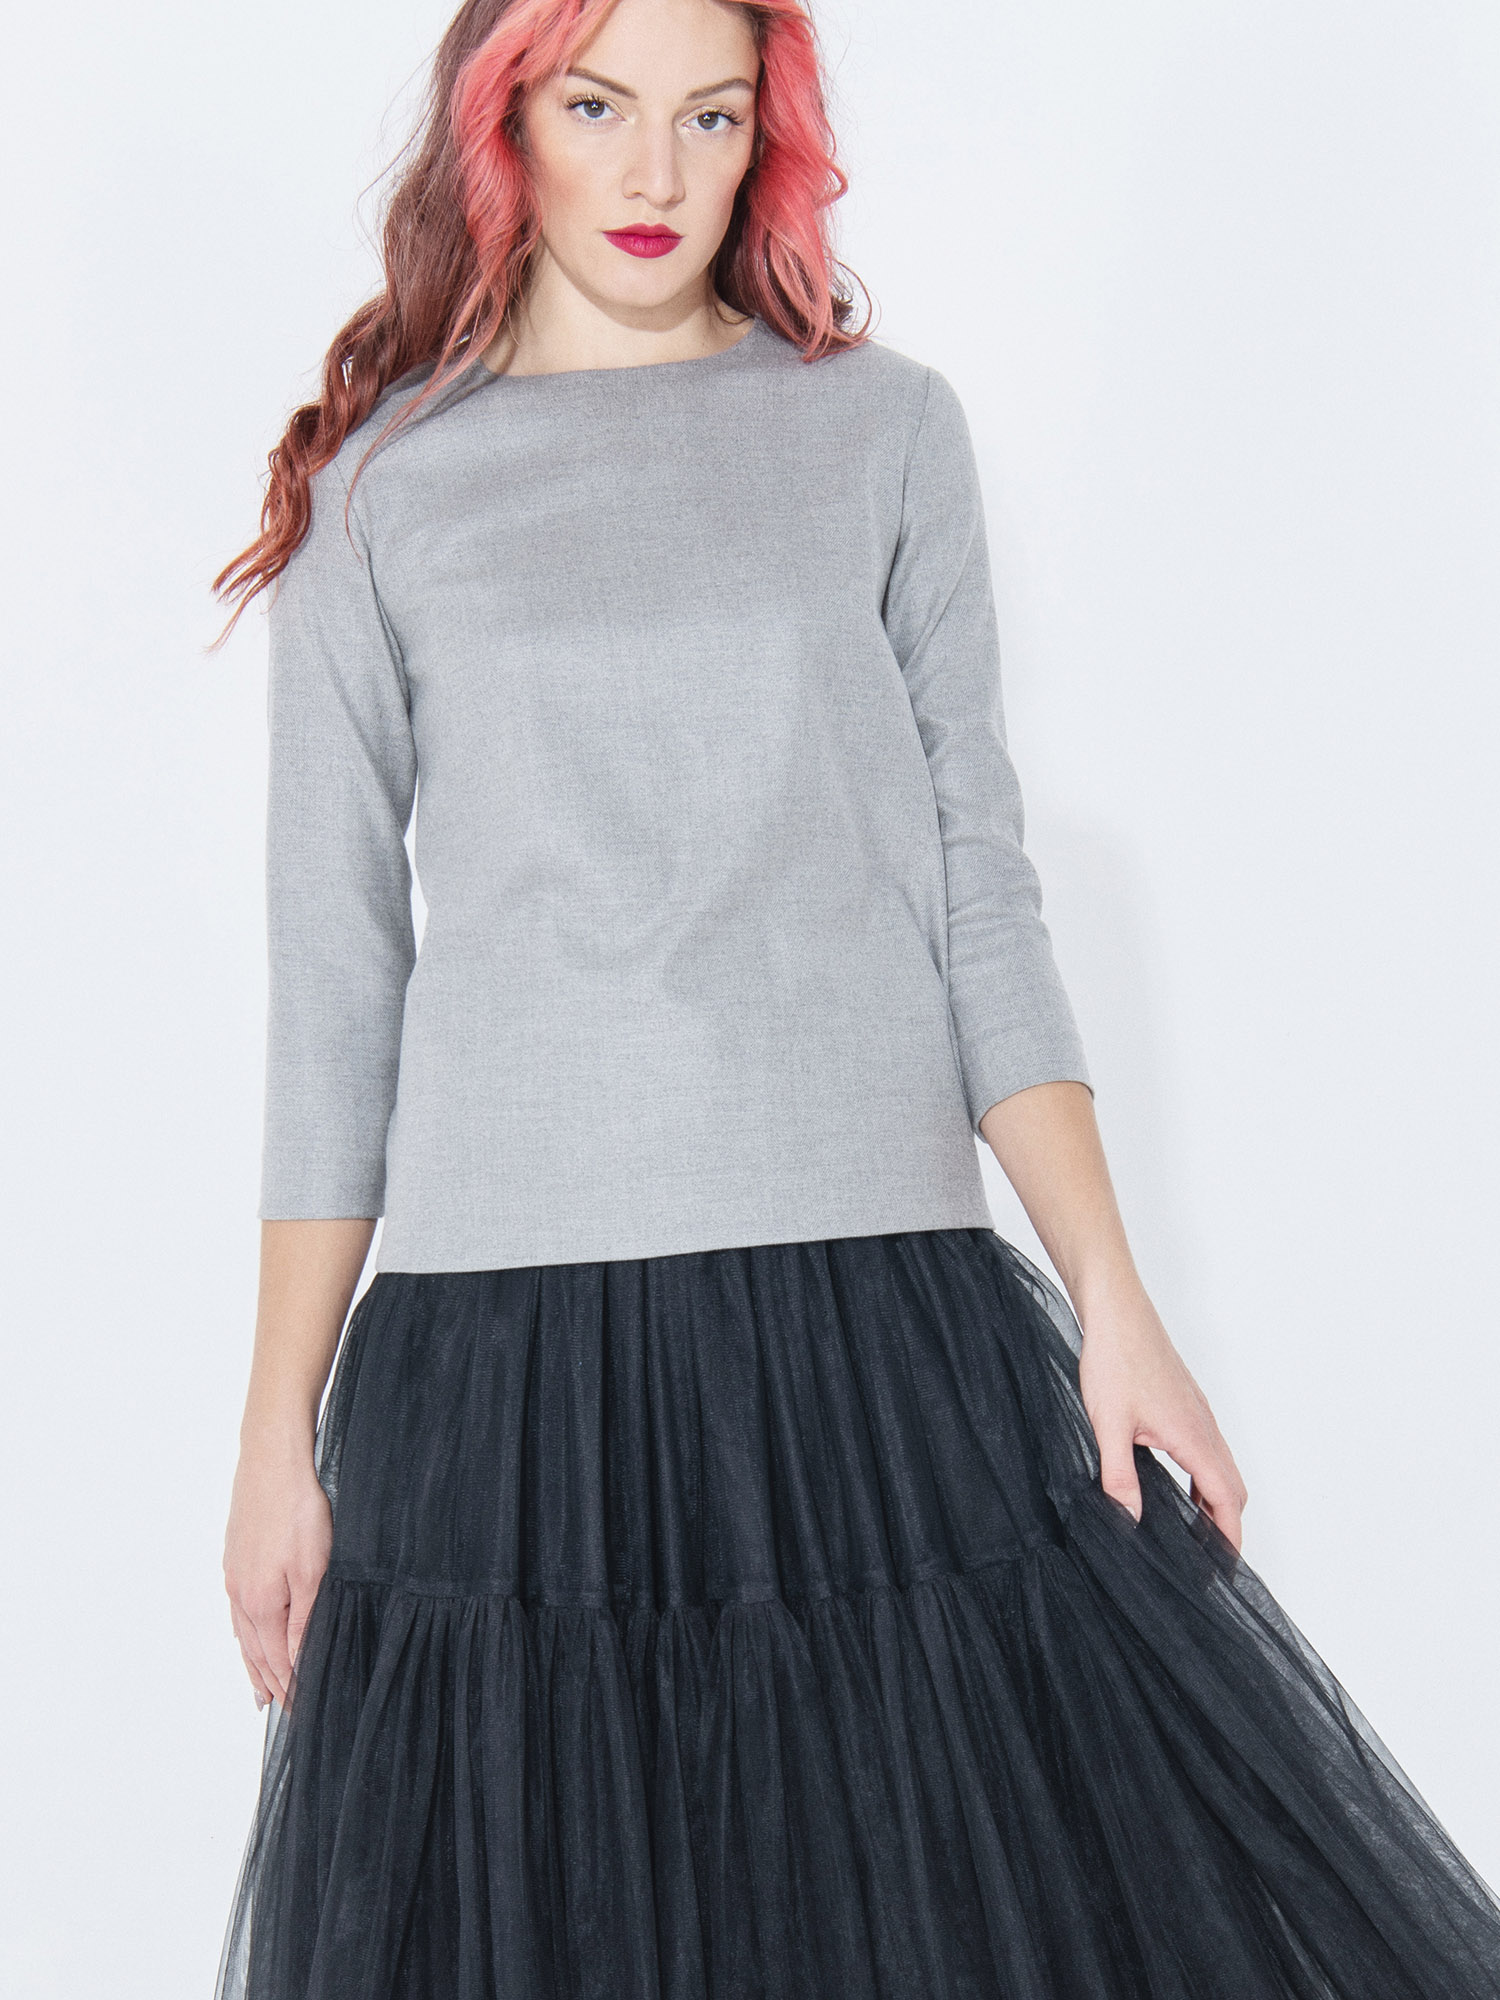 Gray minimal blouse with zipper front • Sassa Björg